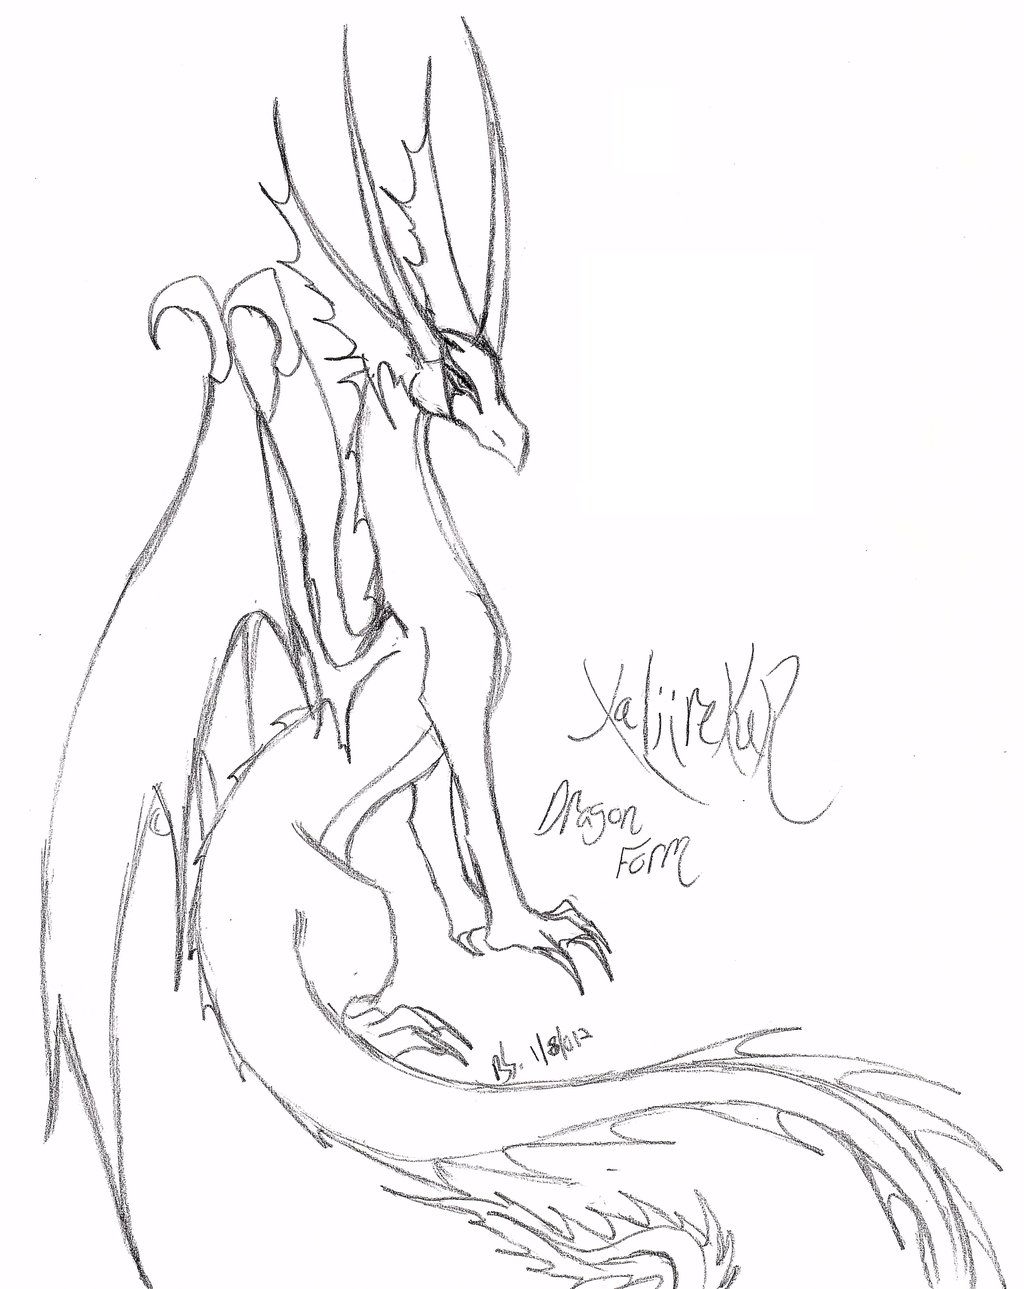 Xaliirekur's dragon form by SweetxinsanityxSarah